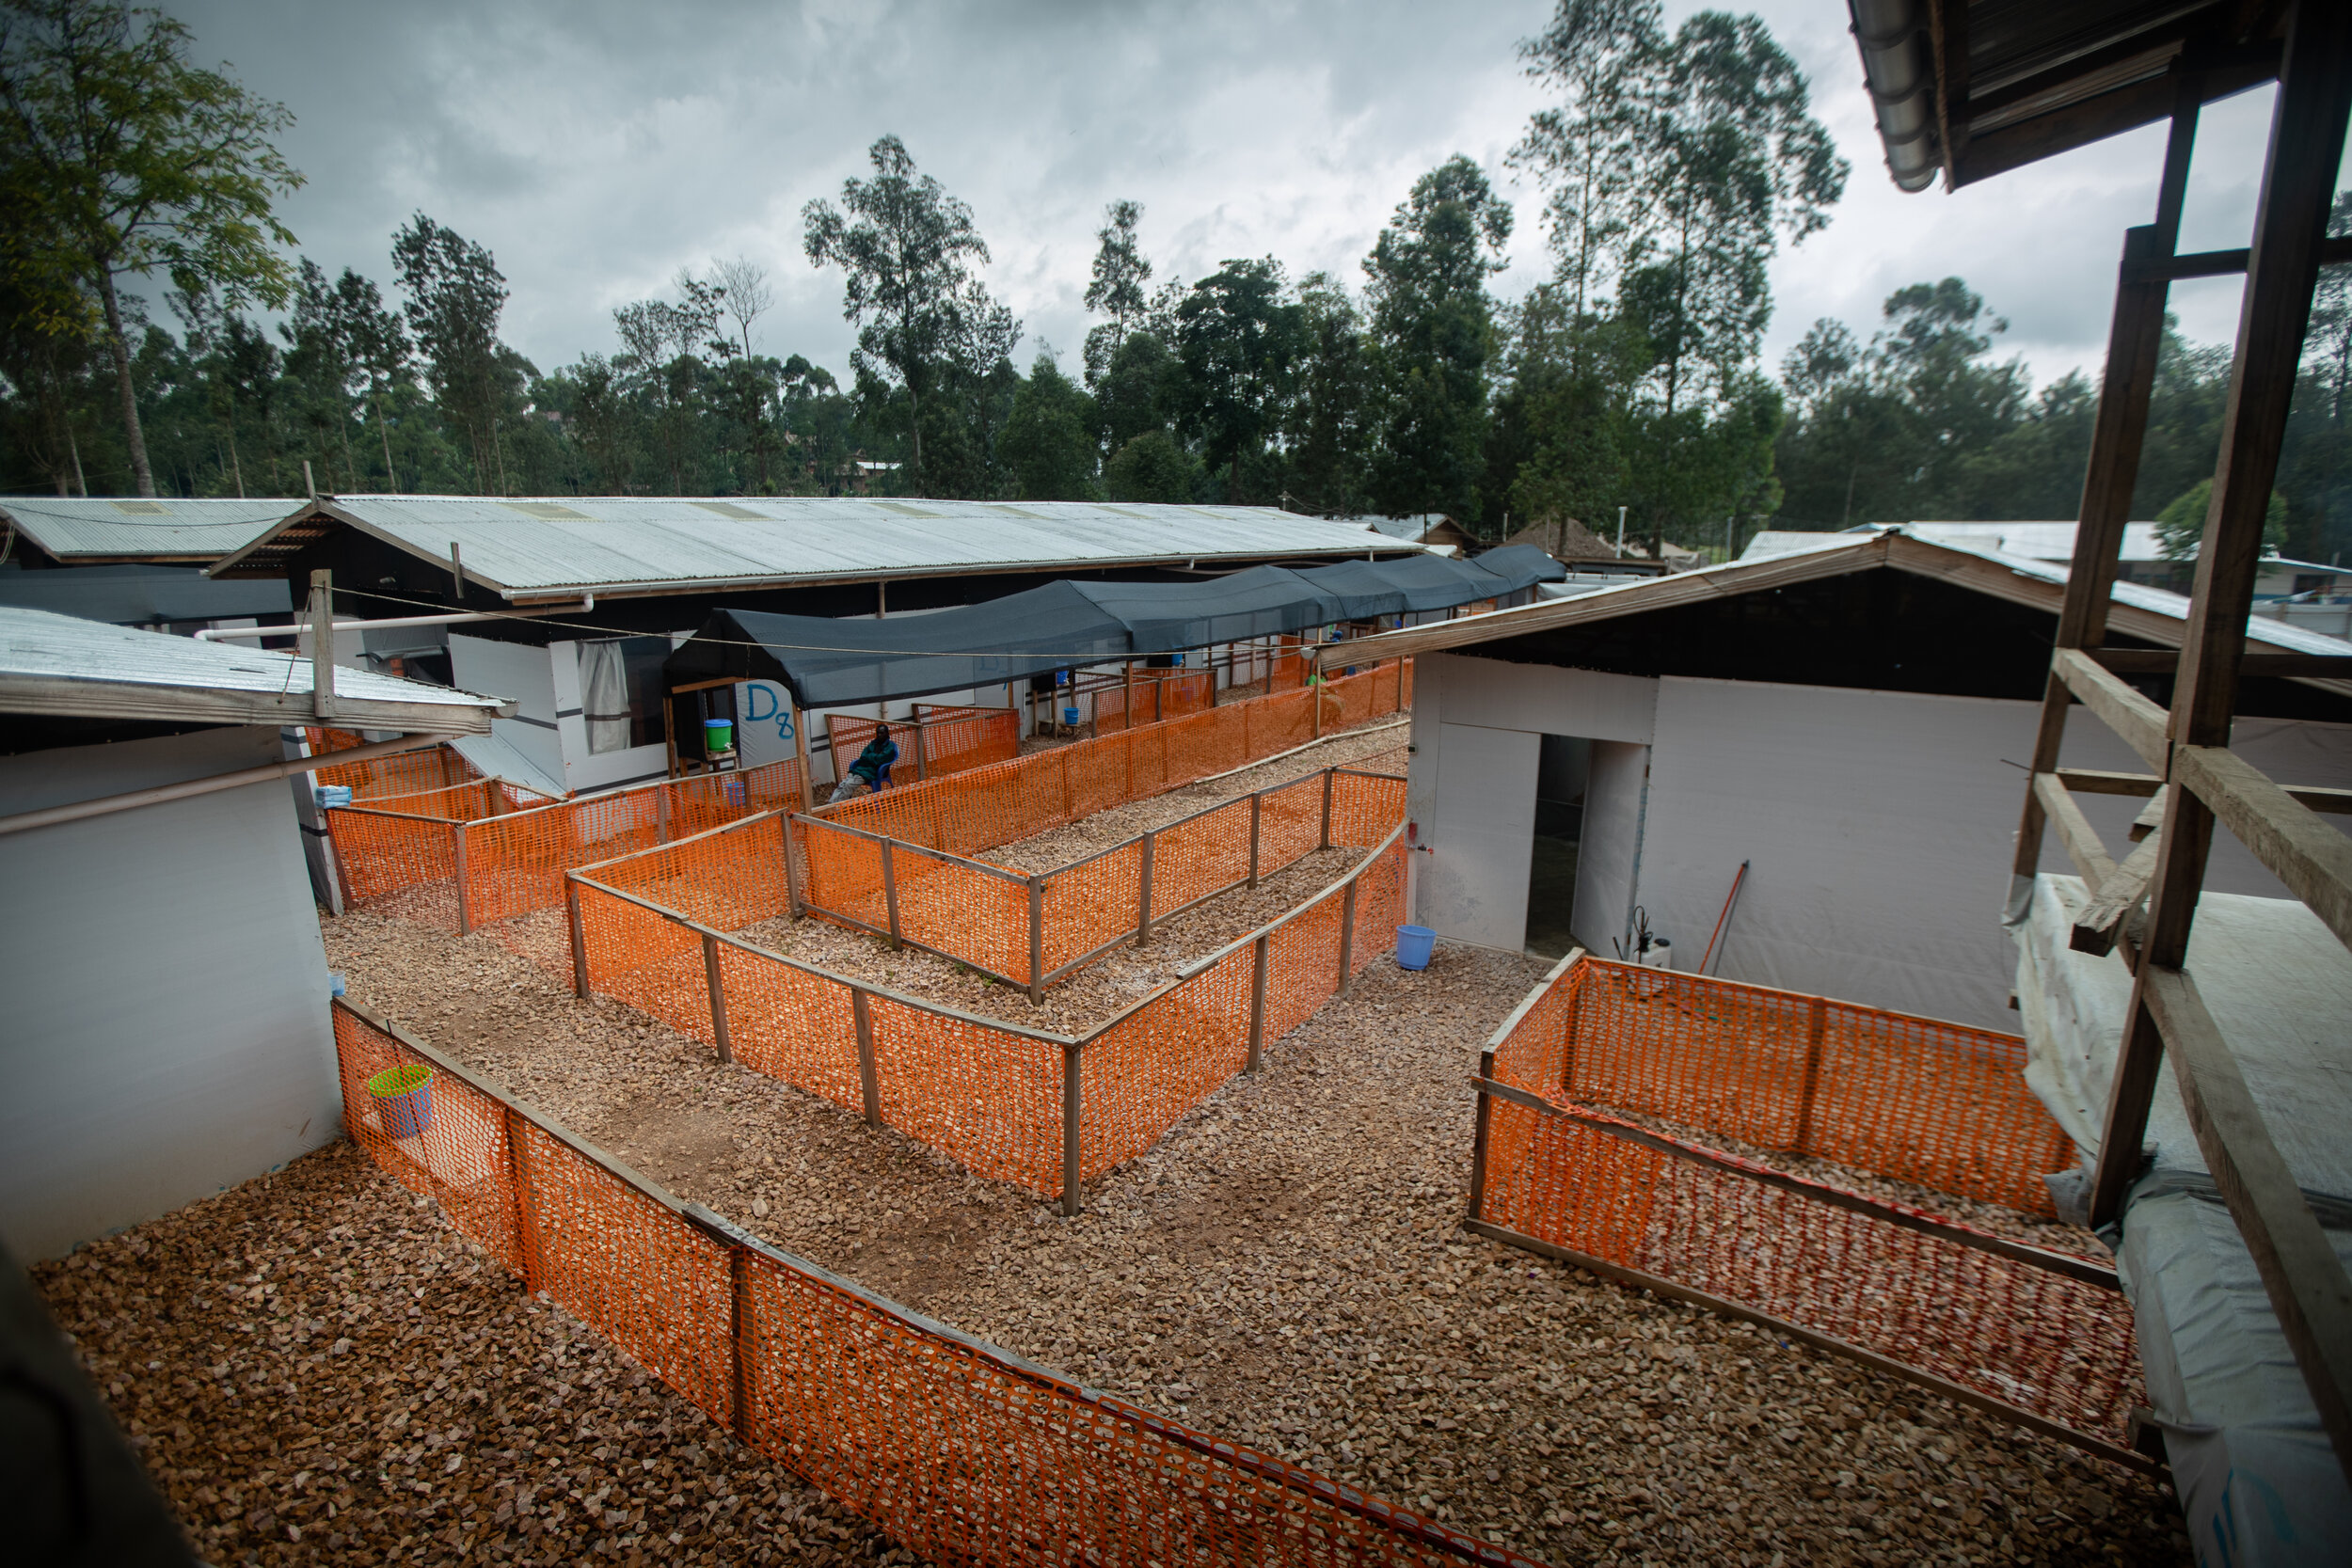  the recovery zone at Katwa Ebola treatment center, The Democratic Republic of Congo, 2019 